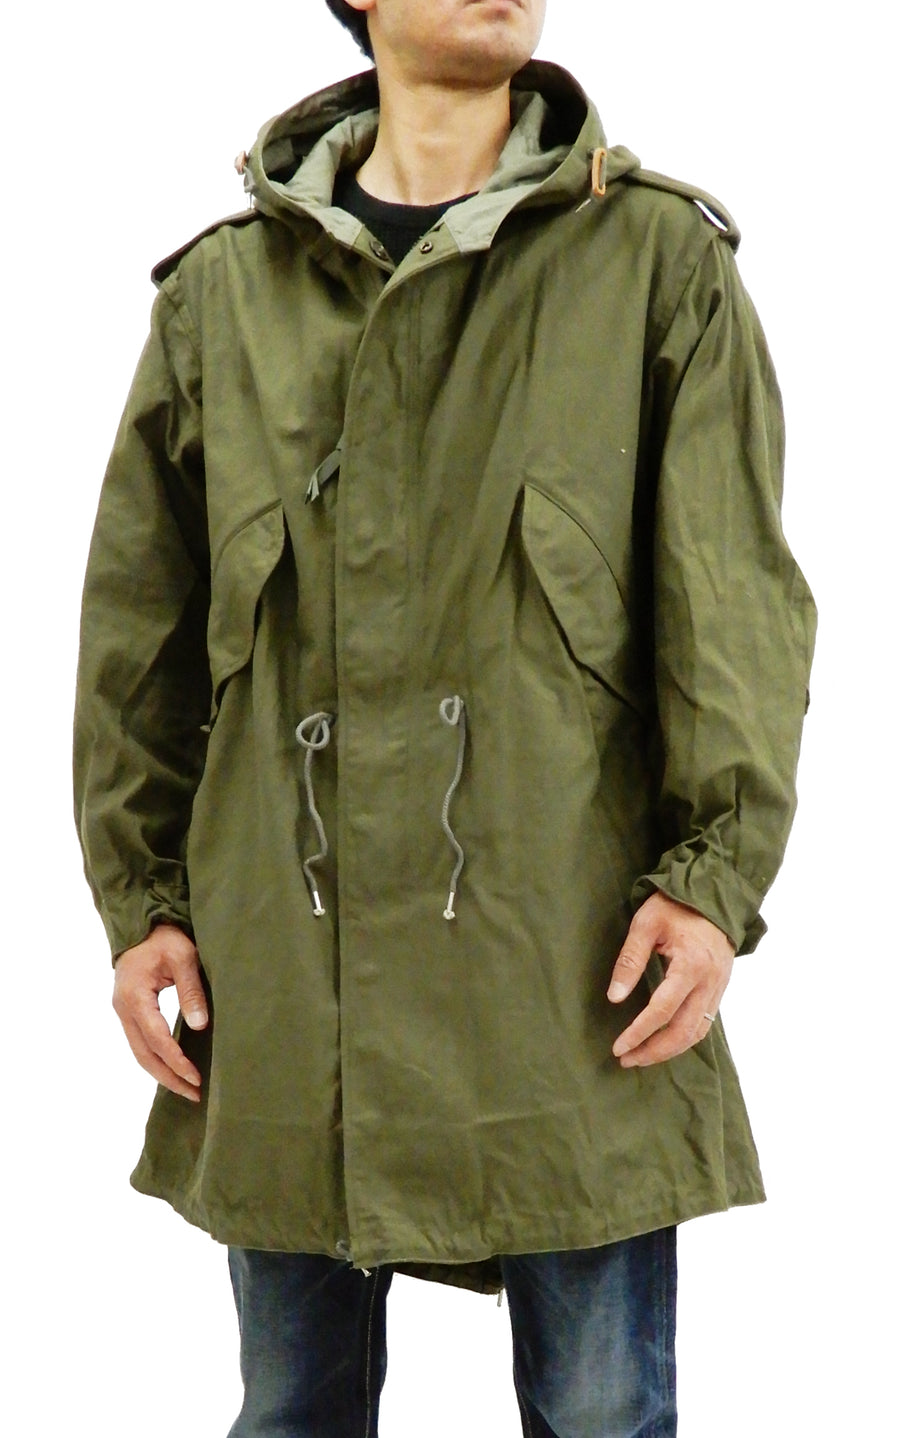 Buzz Rickson Parka Men's U.S. Army M-51 Fishtail Parka Military Coat Jacket BR12266 Olive Drab